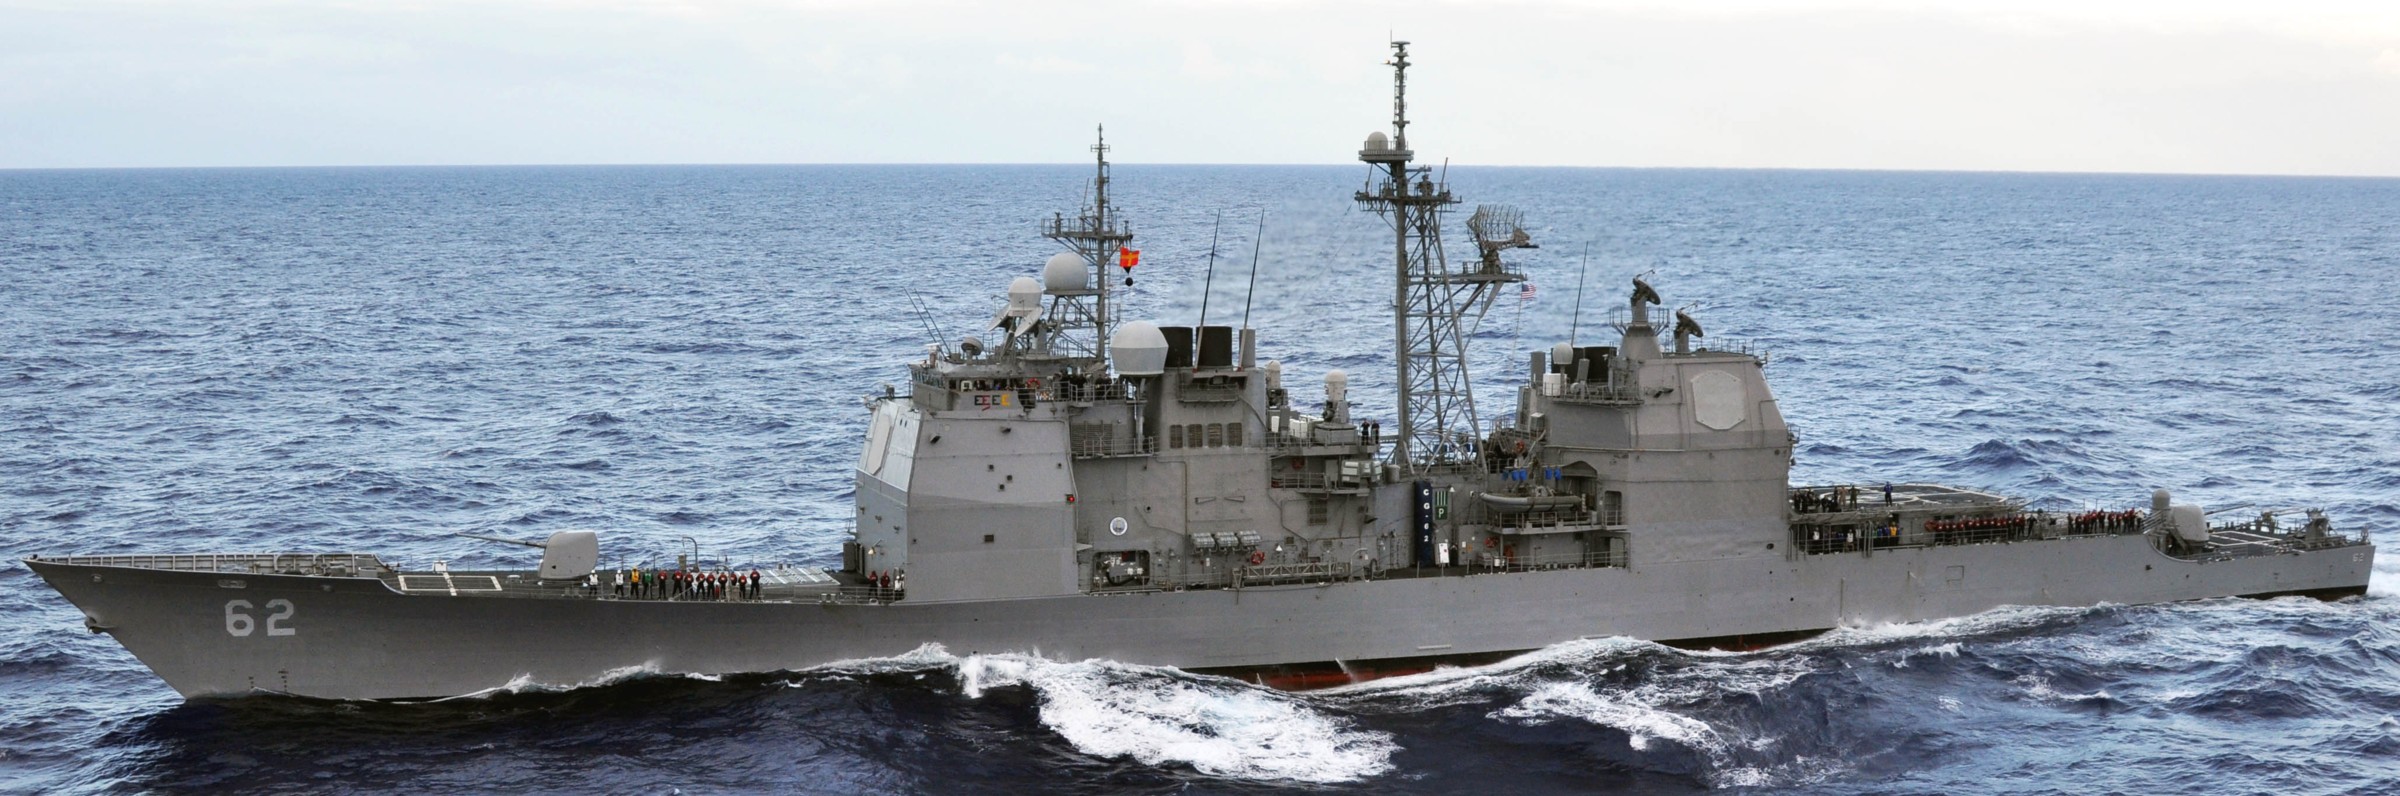 cg-62 uss chancellorsville ticonderoga class guided missile cruiser aegis us navy 22